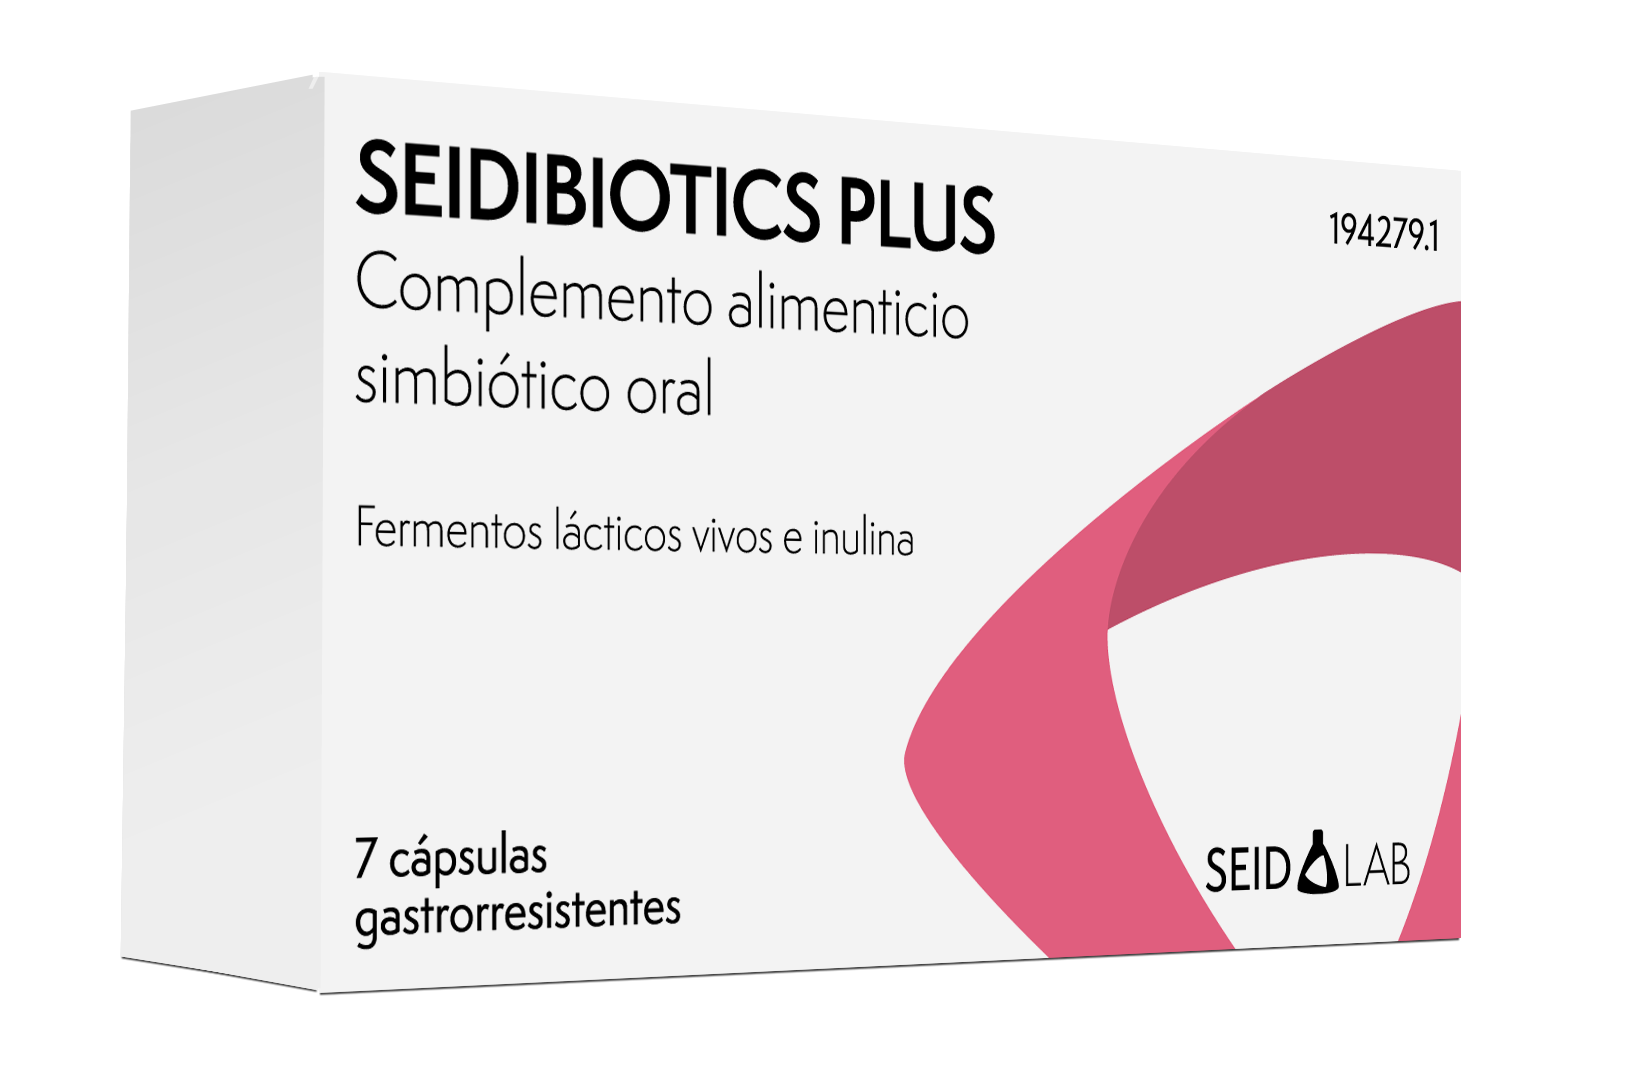 Seidibiotics Plus by SEID Lab